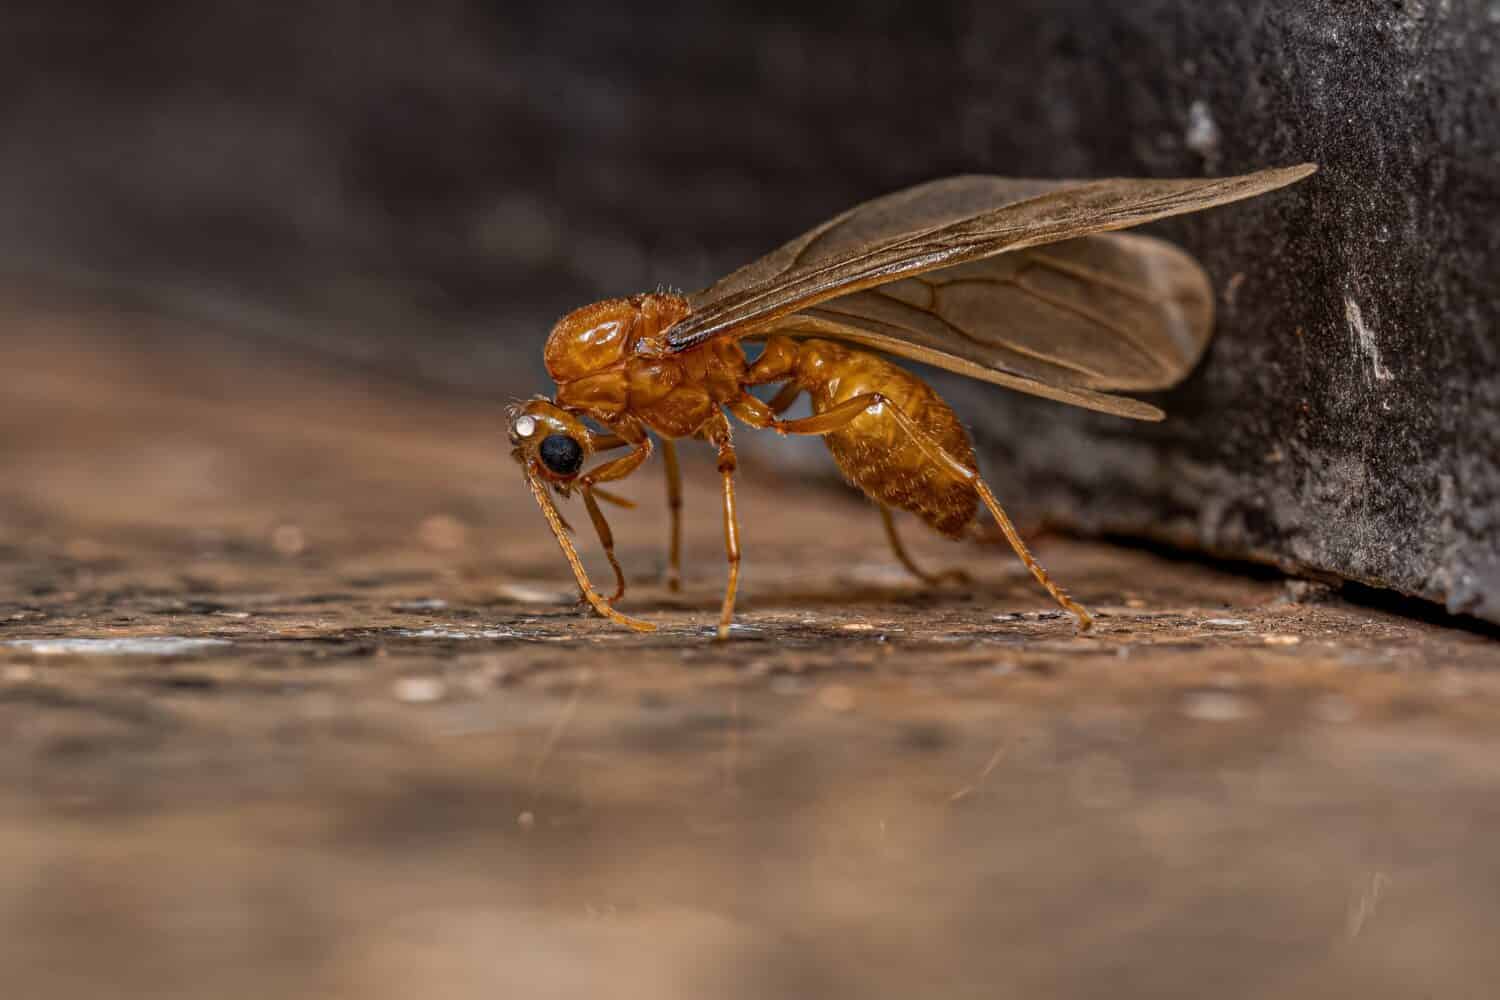 Adult Male Winged Thief Ant of the Genus Carebara